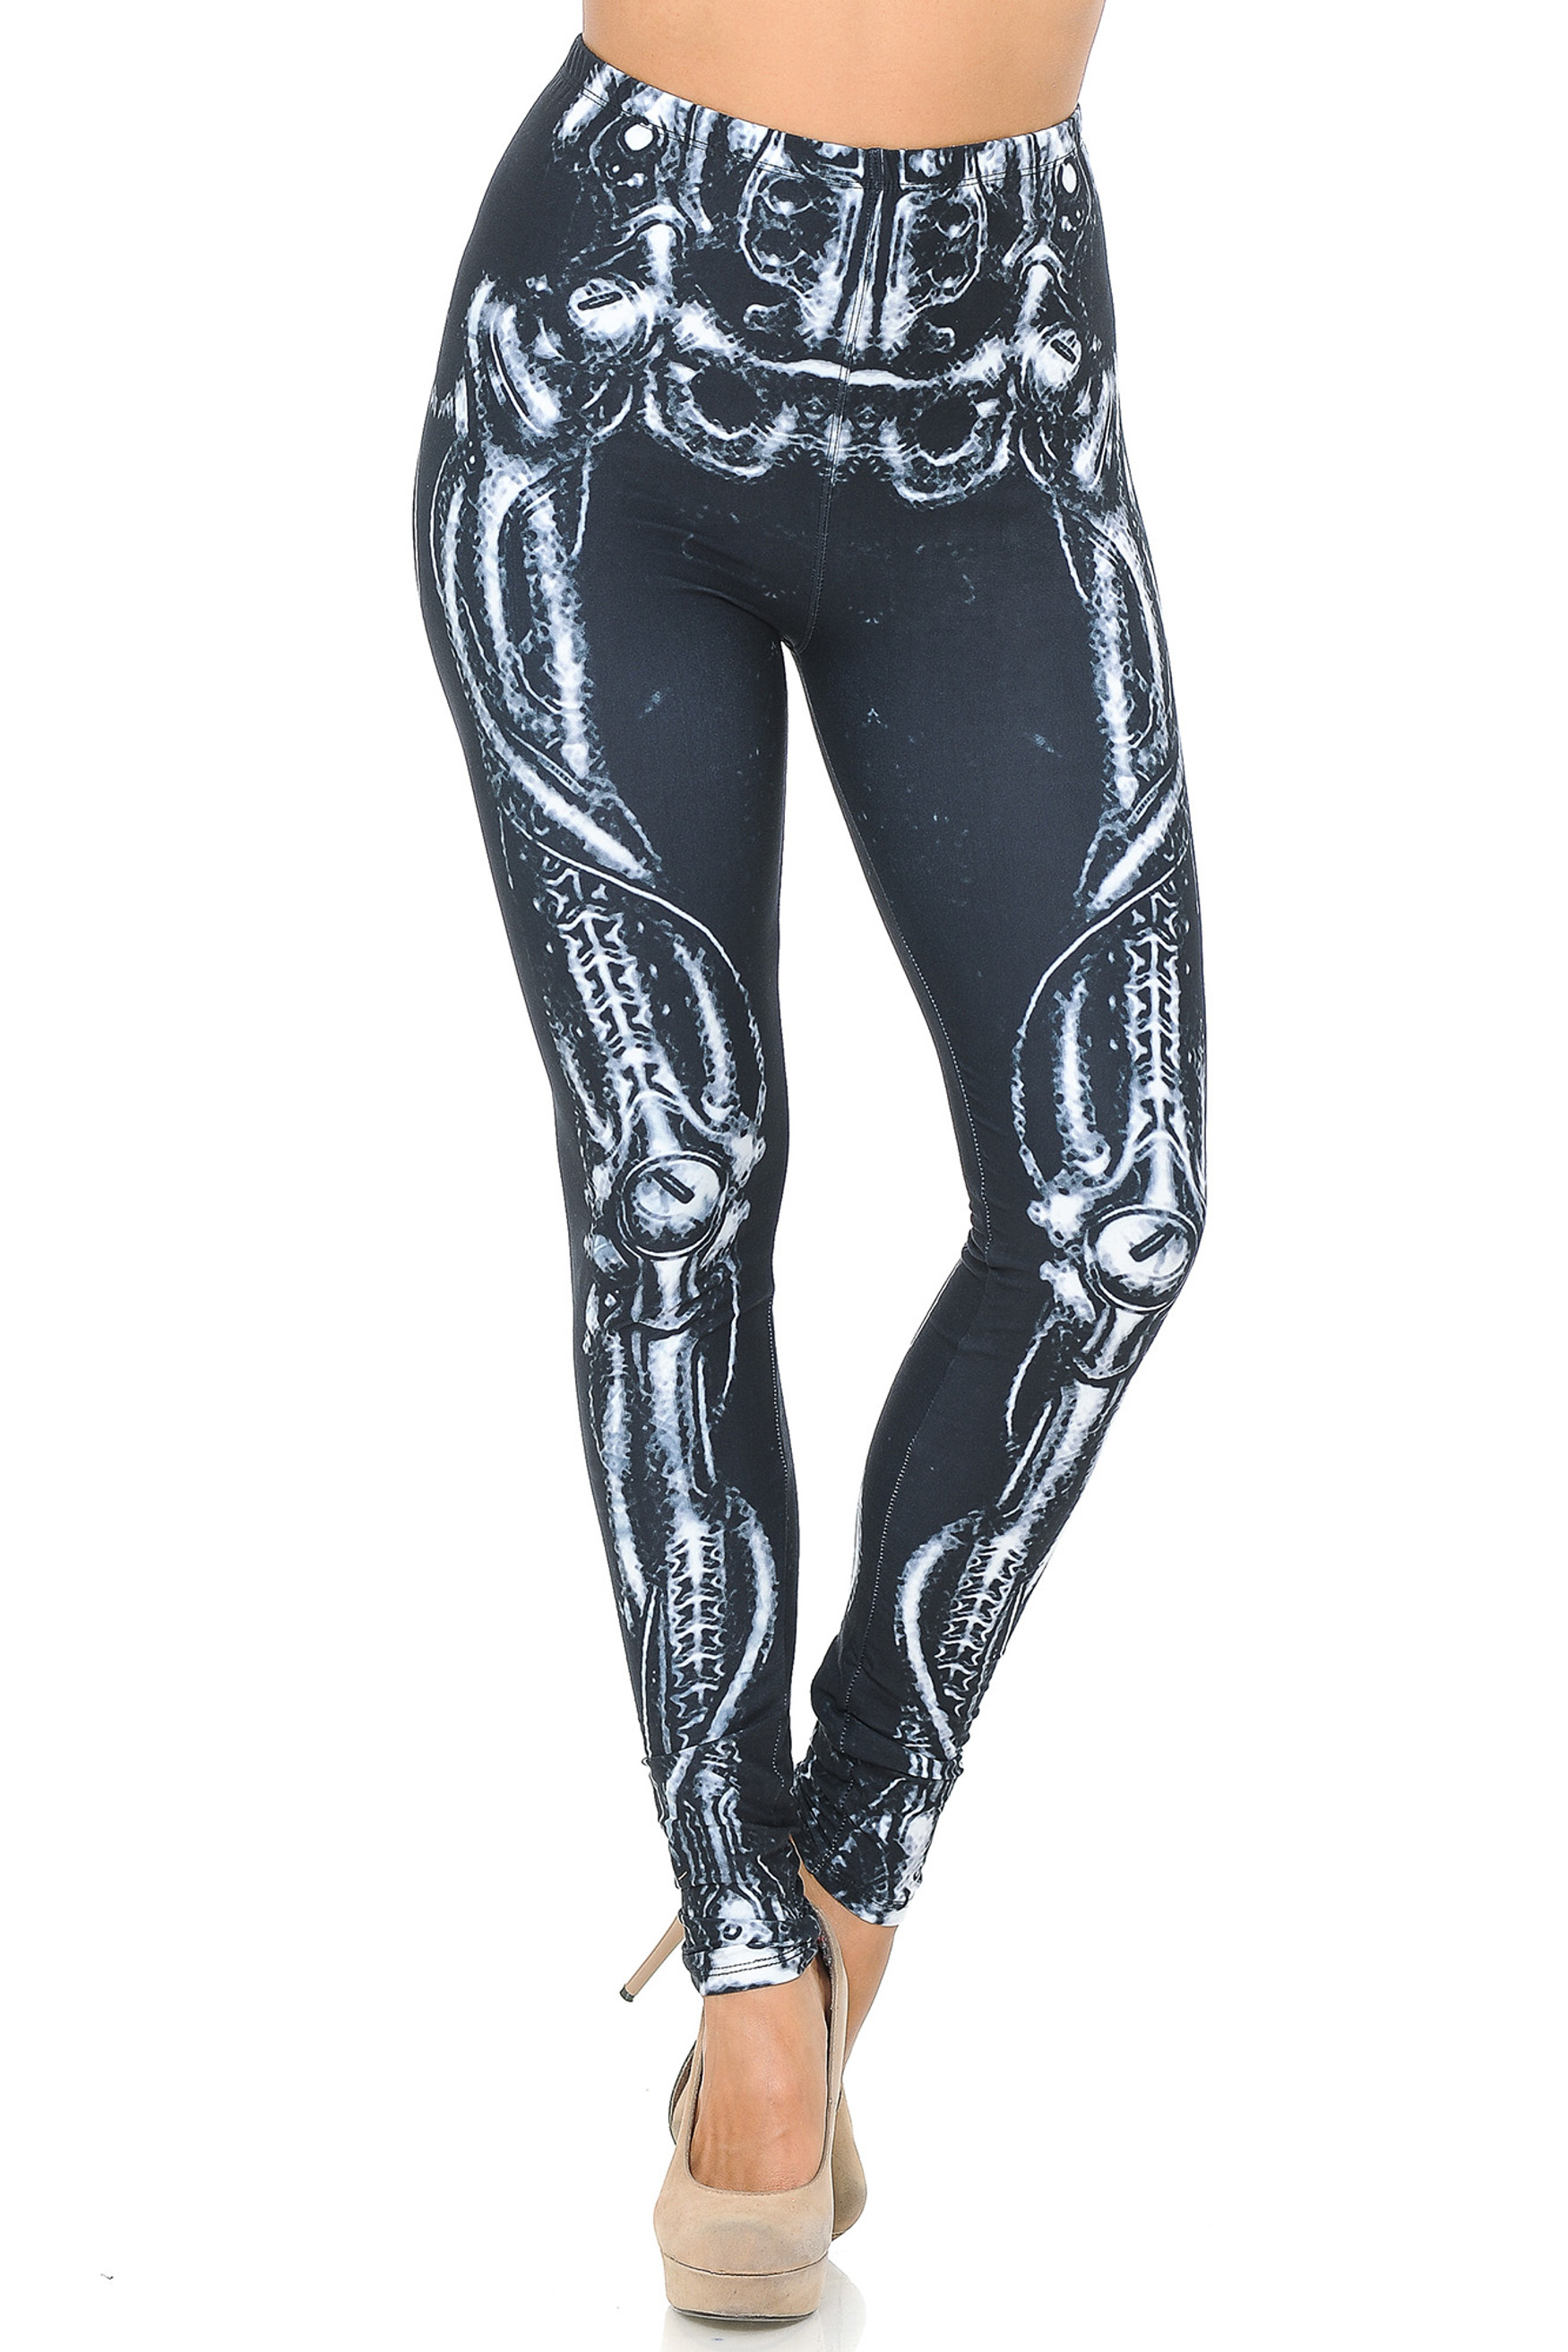 Creamy Soft Black Bio Mechanical Skeleton Leggings (Steam Punk) - USA Fashion™